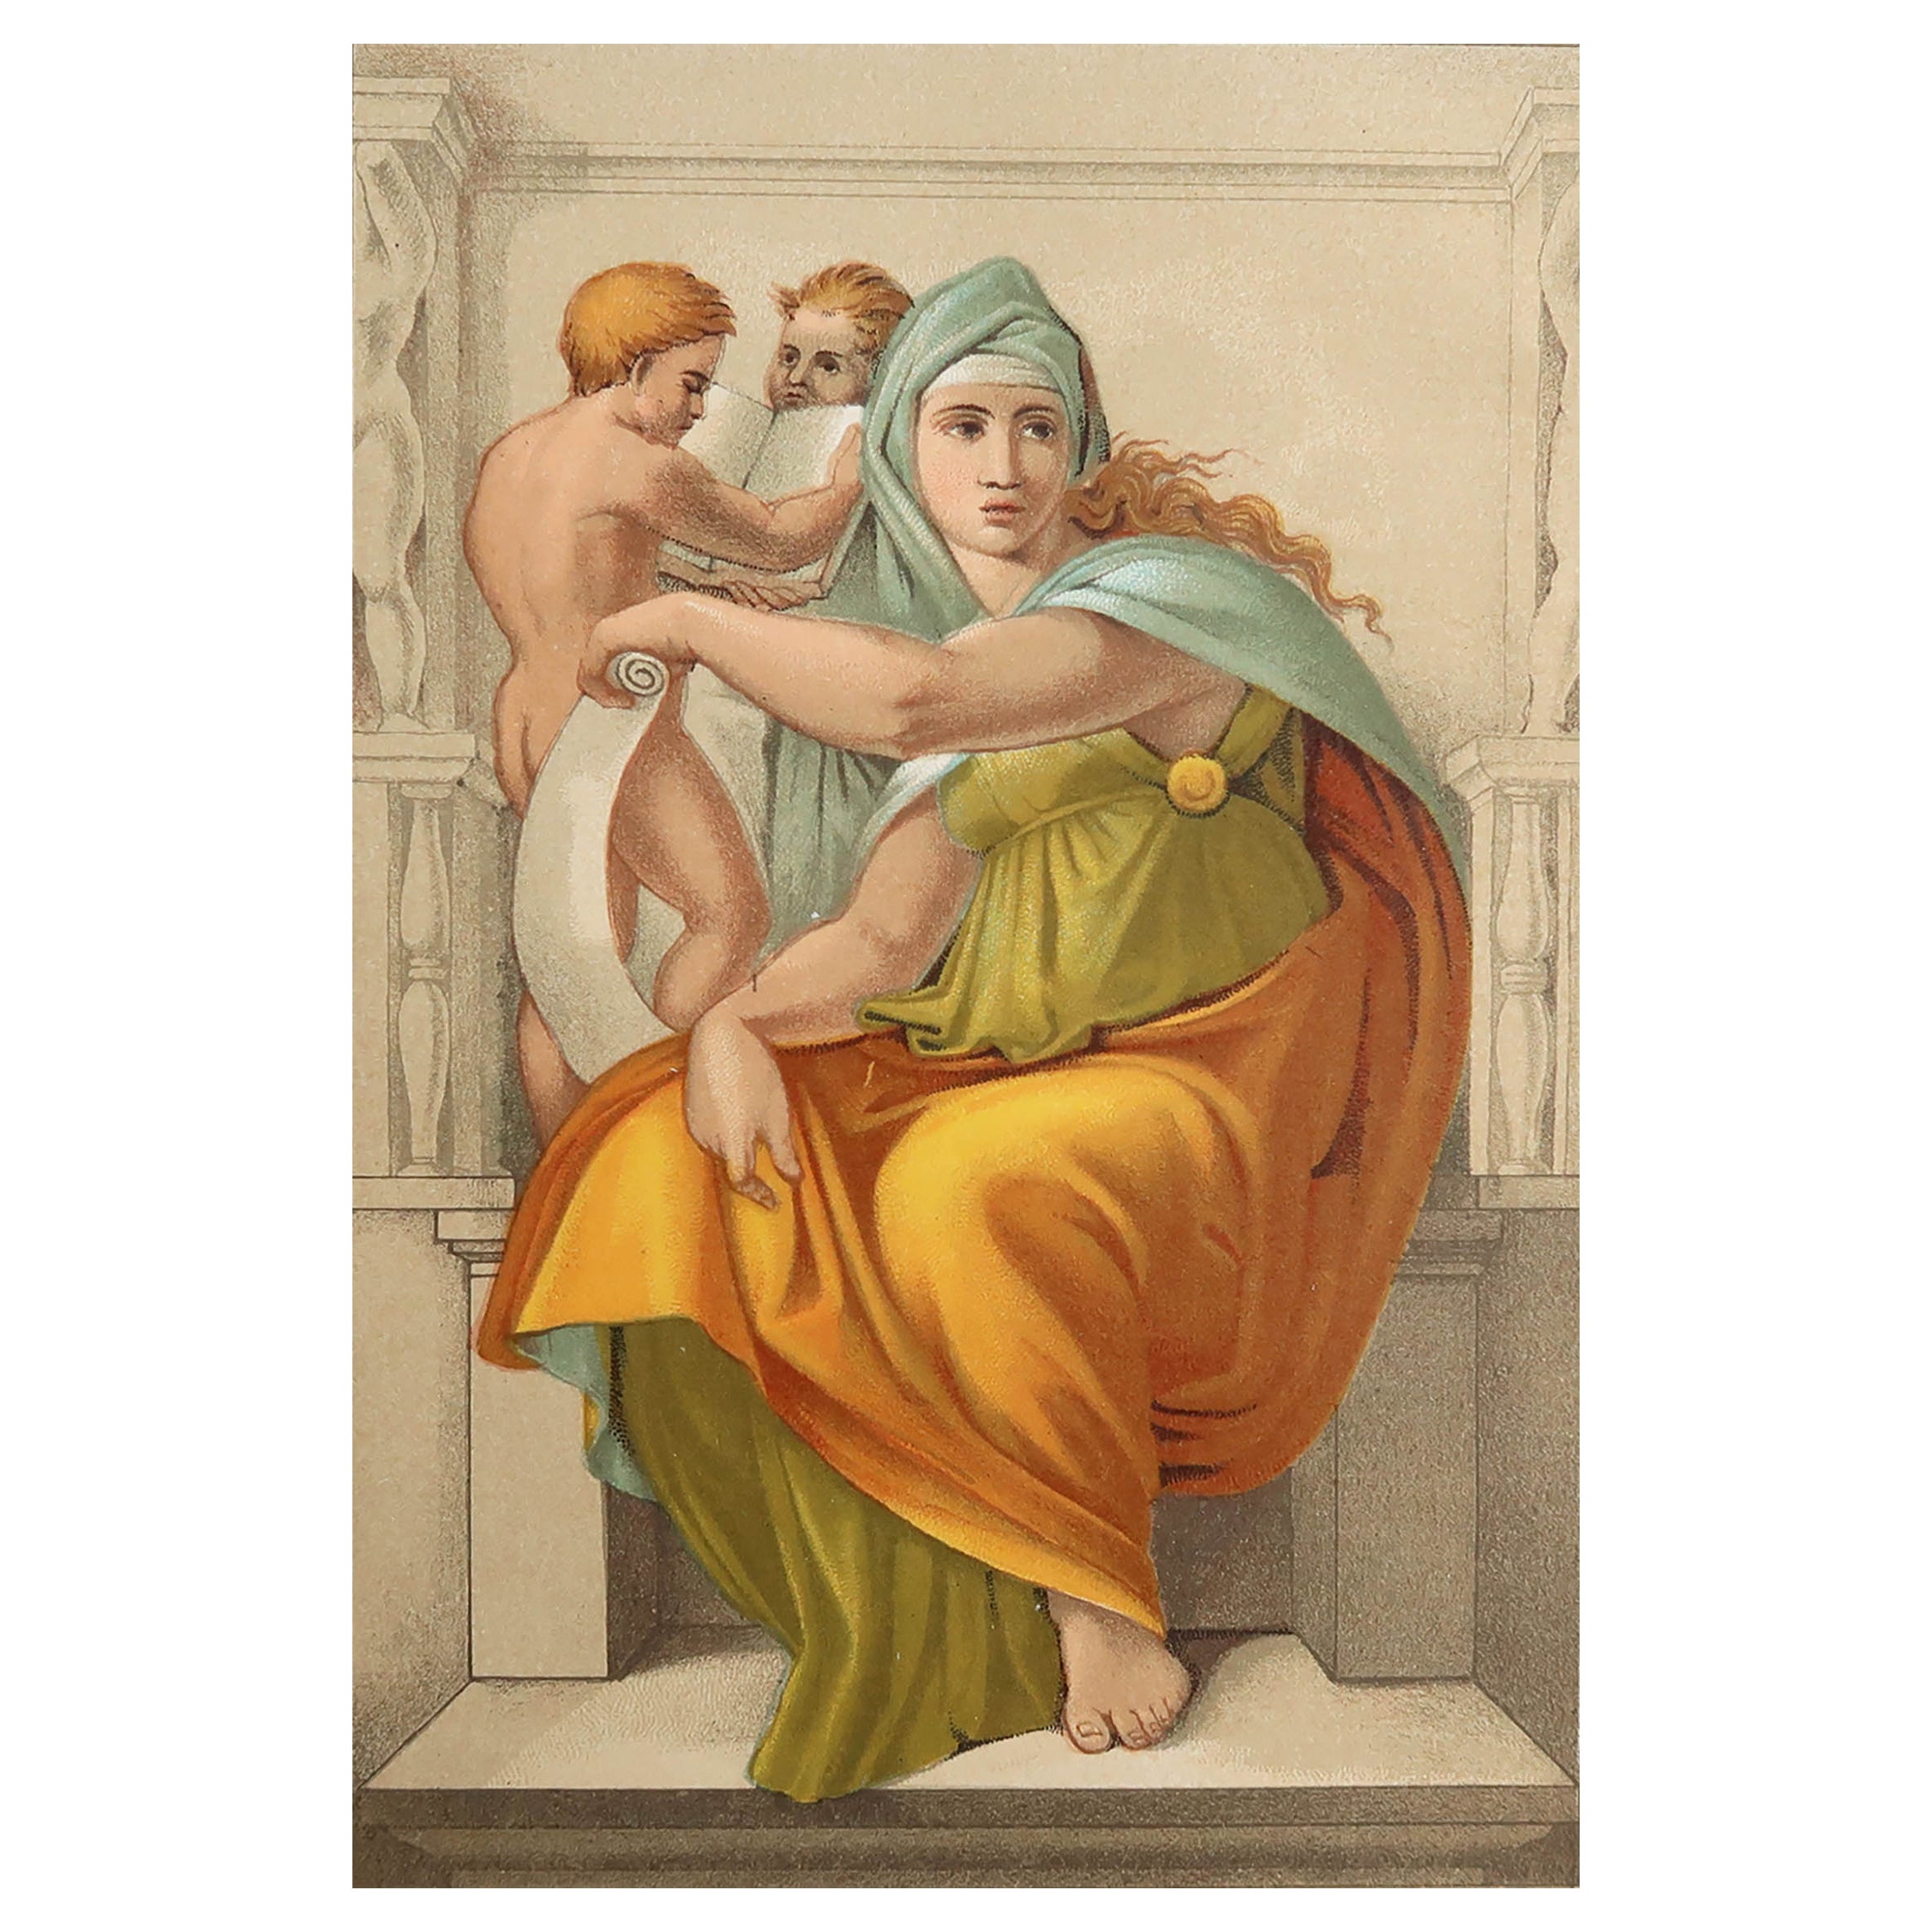   Original Antique Print of a Fresco By Michelangelo, C.1880